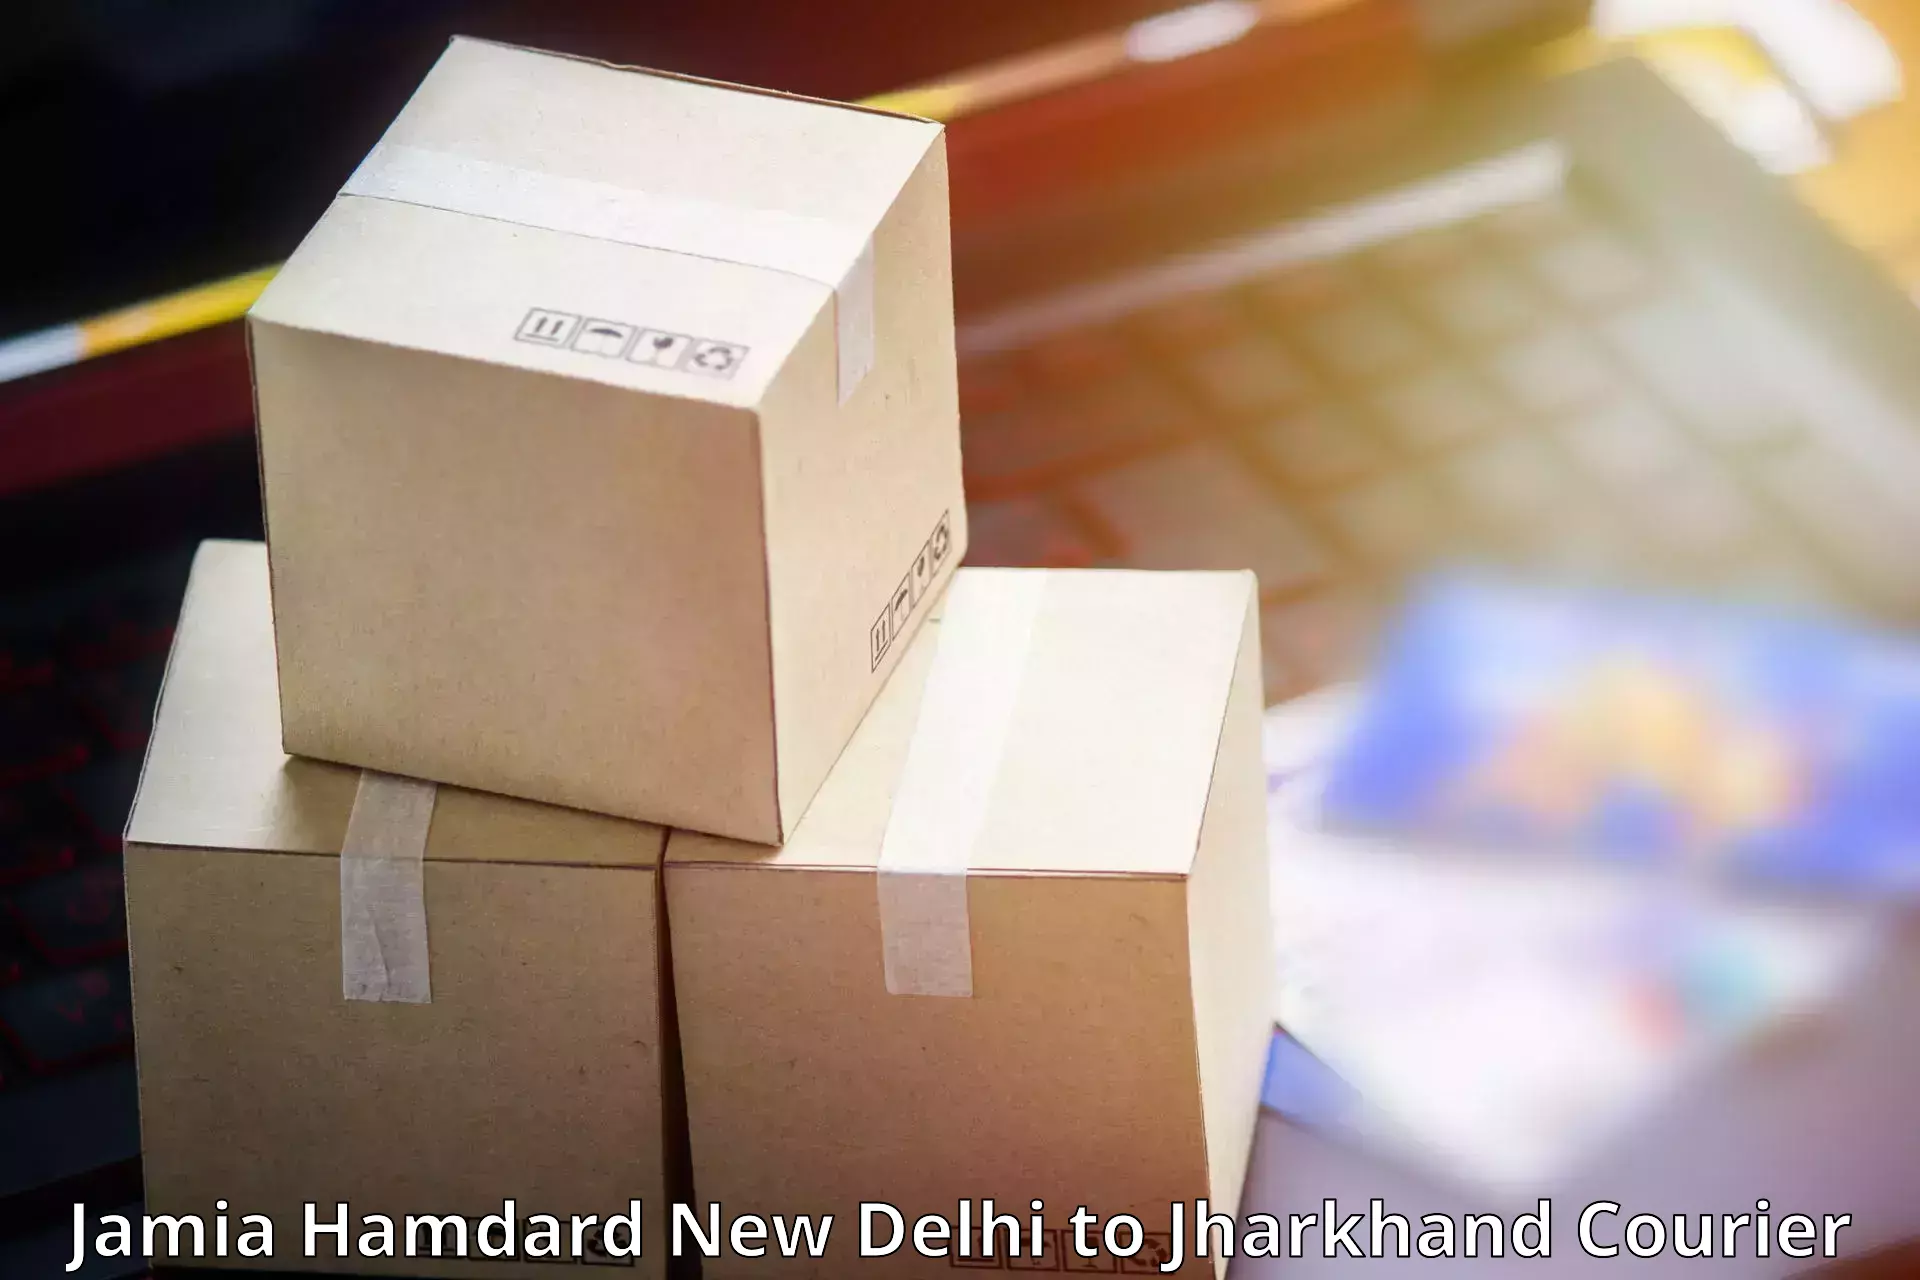 Professional courier handling Jamia Hamdard New Delhi to Ramgarh